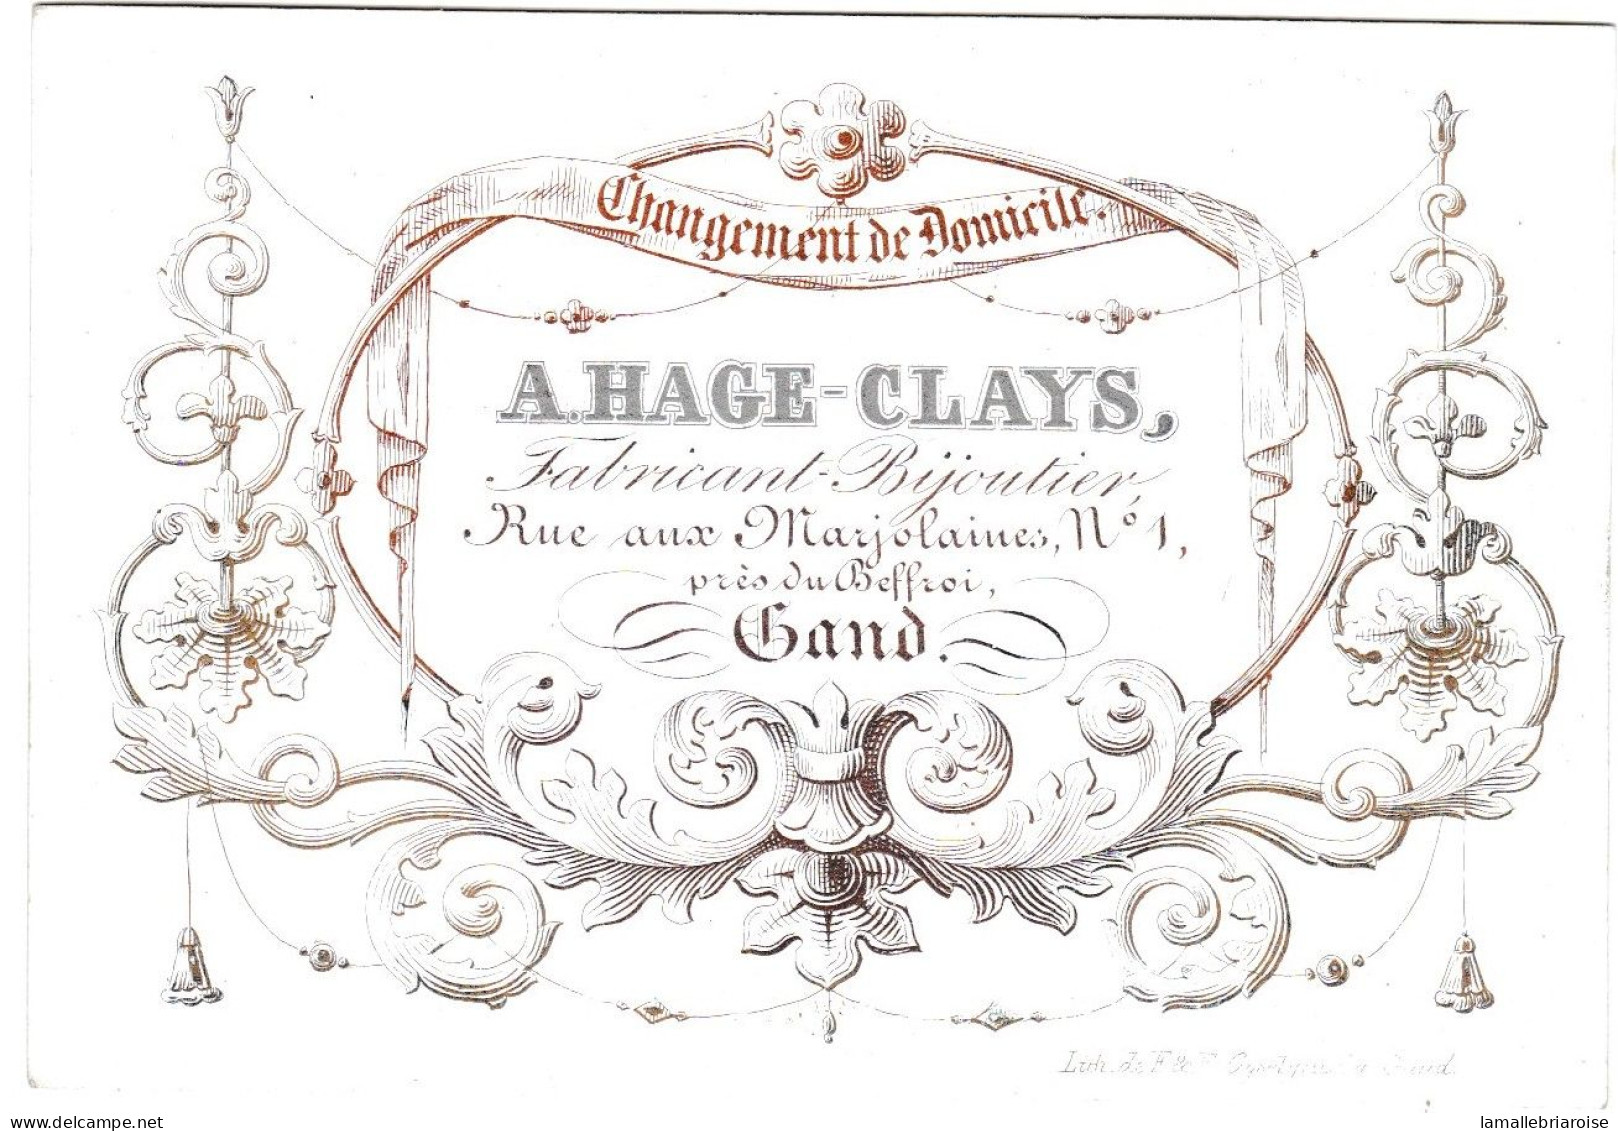 Belgique "Carte Porcelaine" Porseleinkaart, A.Hage - Clays, Bijoutier, Gand, Dim:108x 75mm - Porcelana